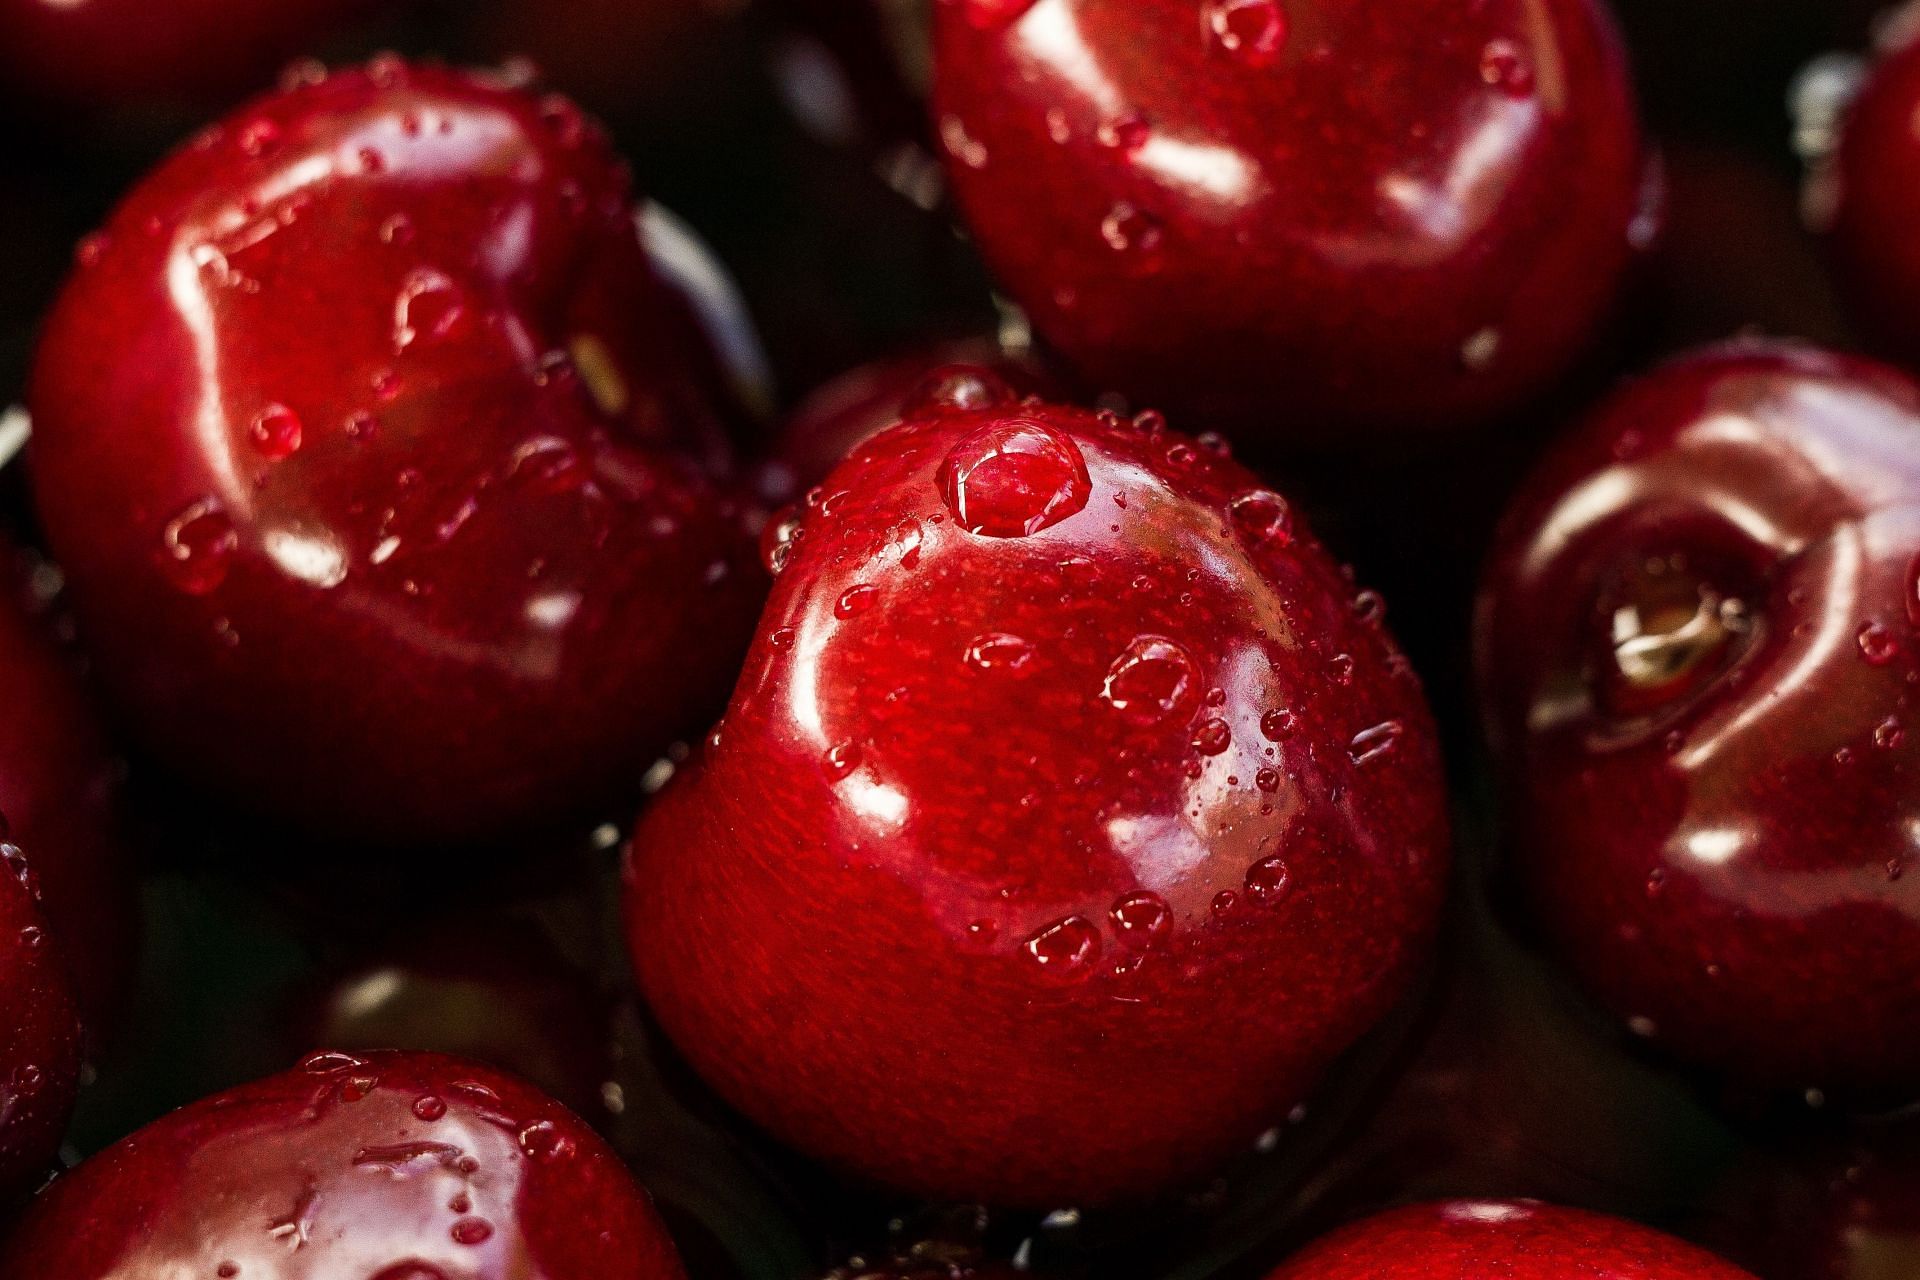 Cherry juice can improve sleep quality. (Image via Unsplash/Roksolana Zasiadko)